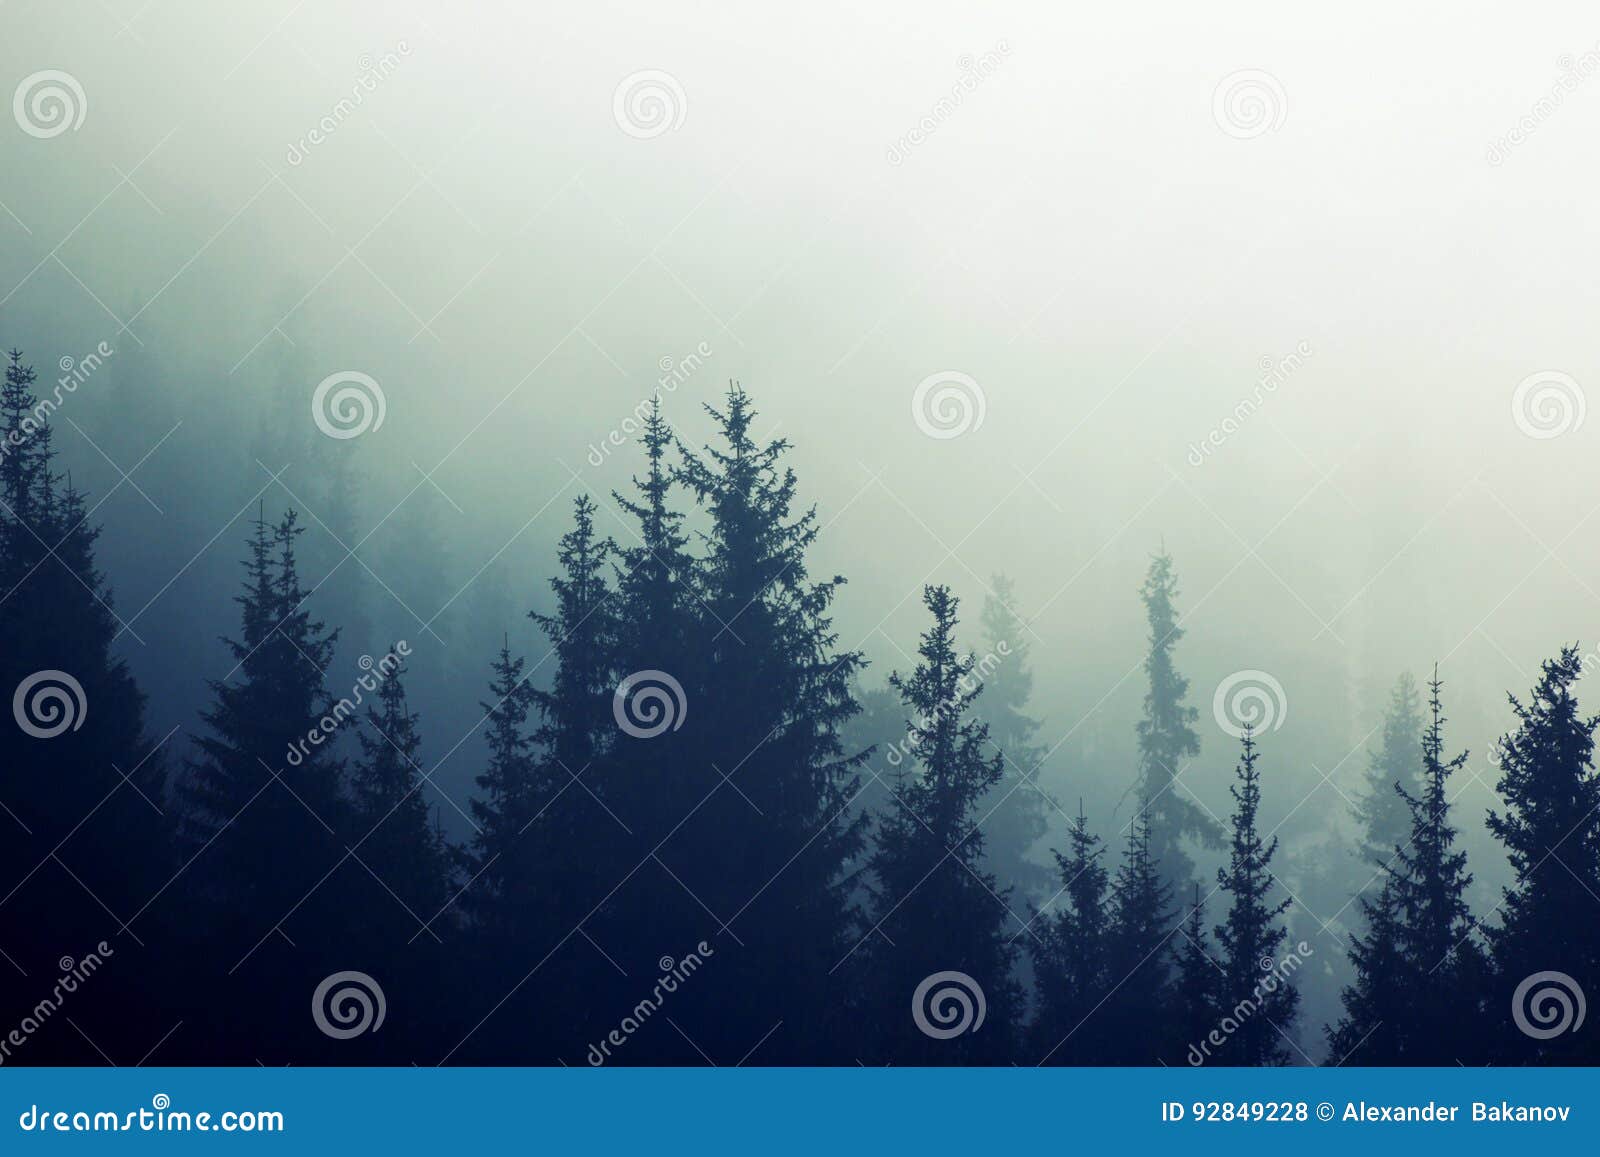 misty fog pine forest mountain slopes color toning